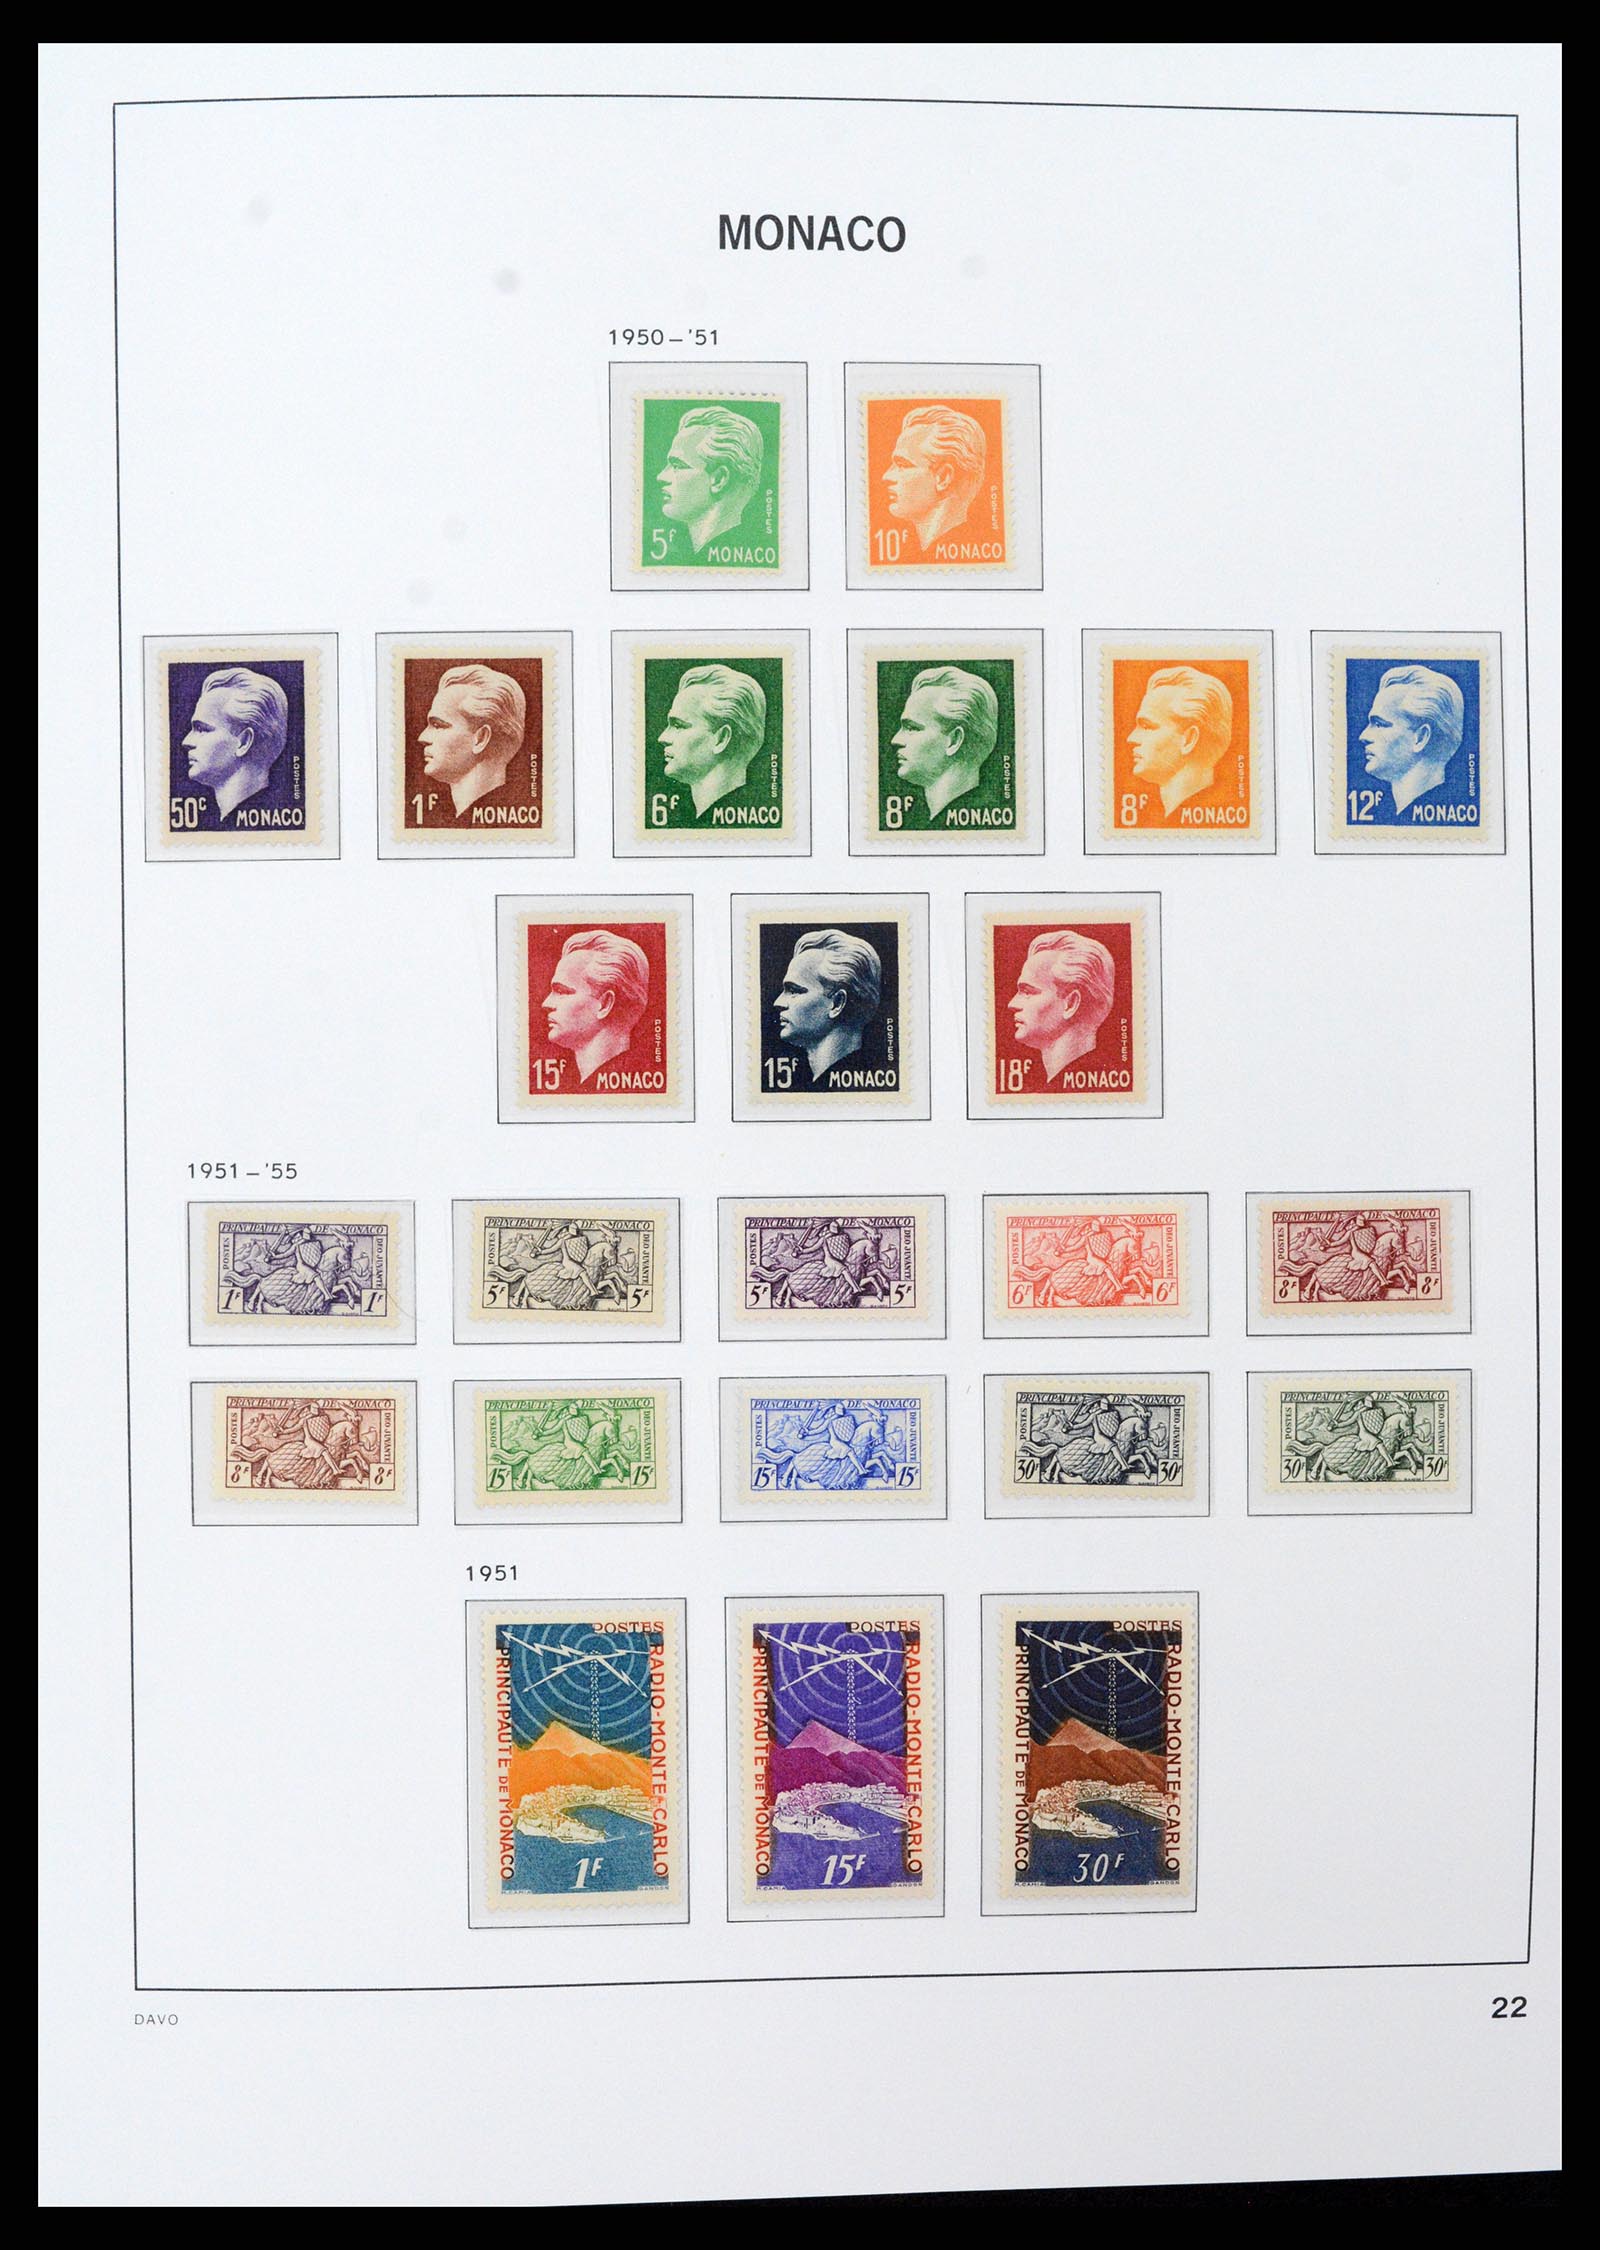 37279 022 - Stamp collection 37279 Monaco 1885-1969.